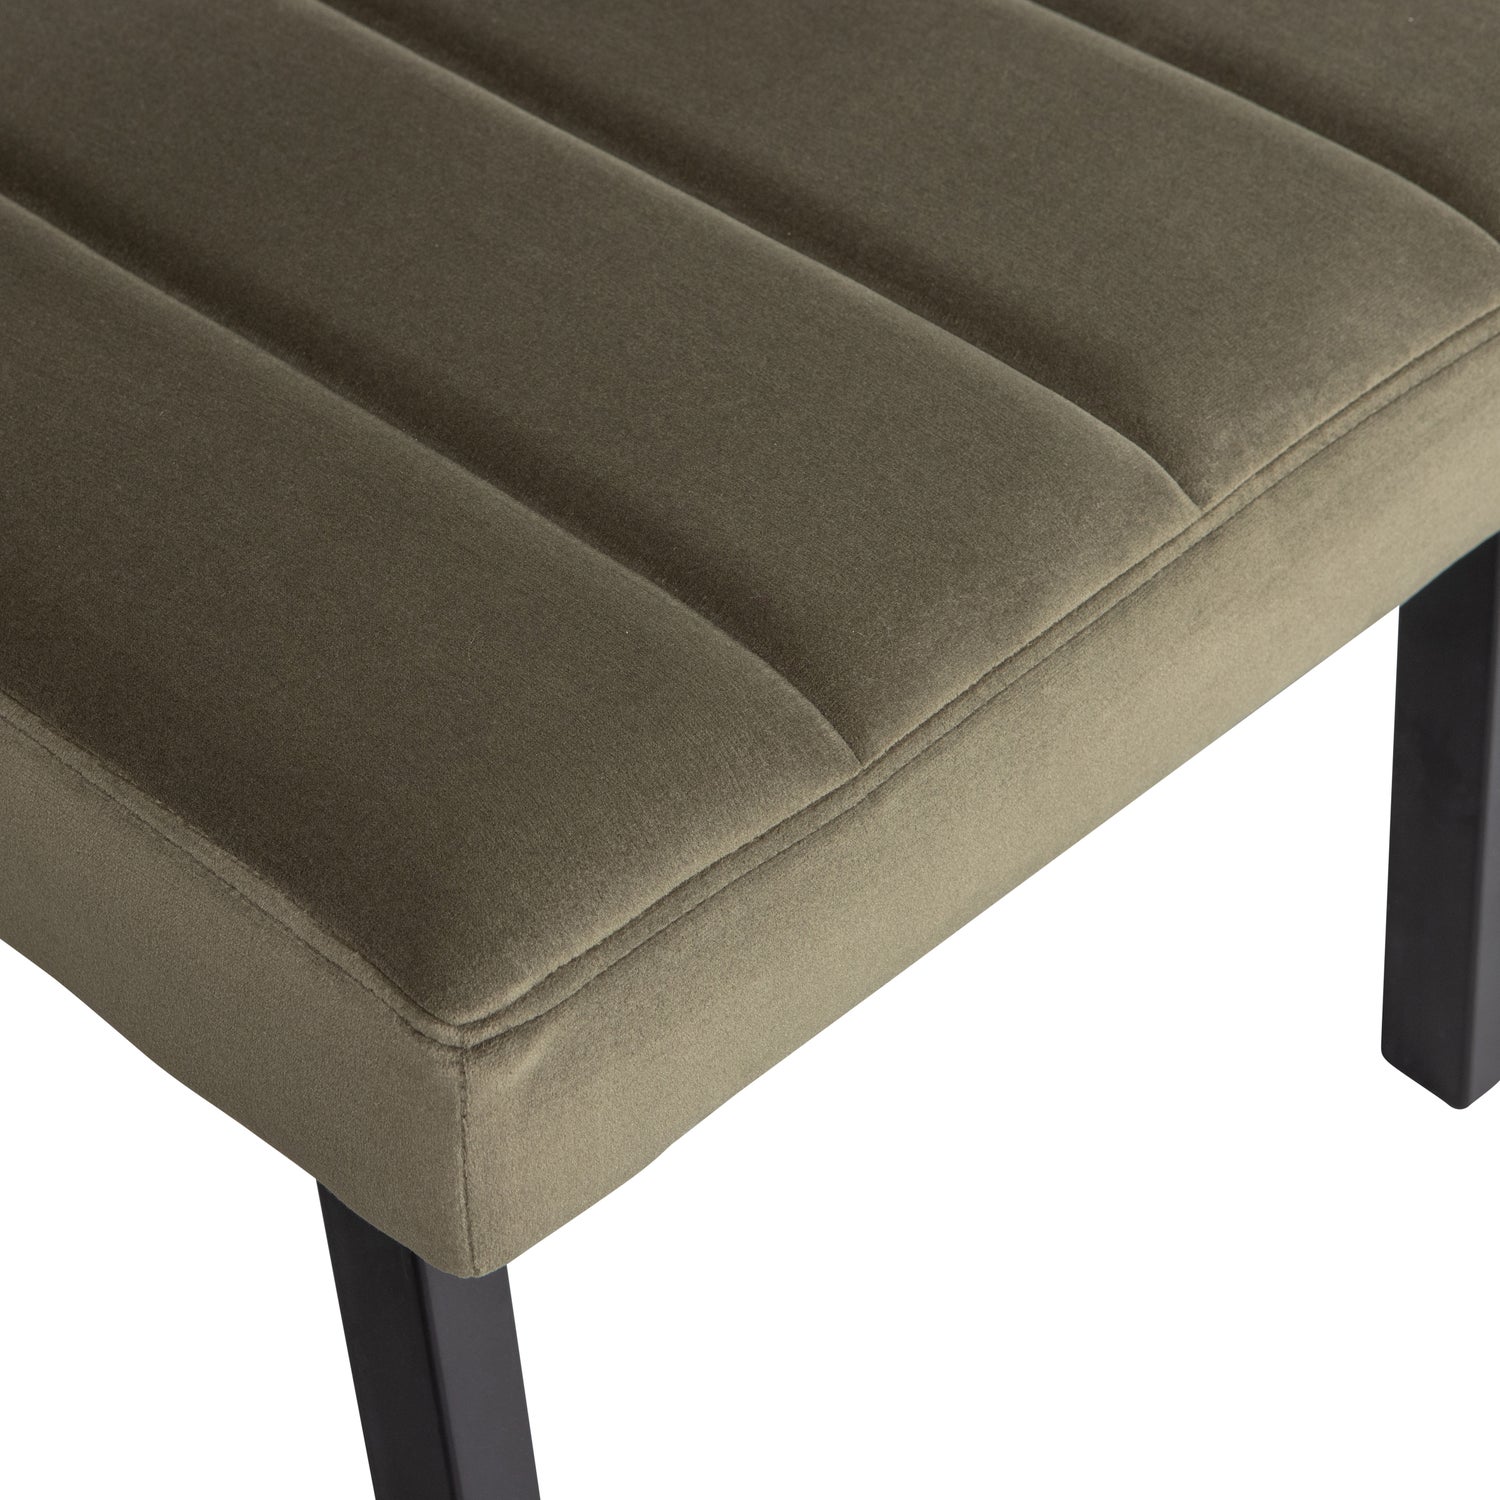 377205-A-01_VS_WE_Kaja_fauteuil_velvet_army_detail.jpg?auto=webp&format=png&width=1500&height=1500